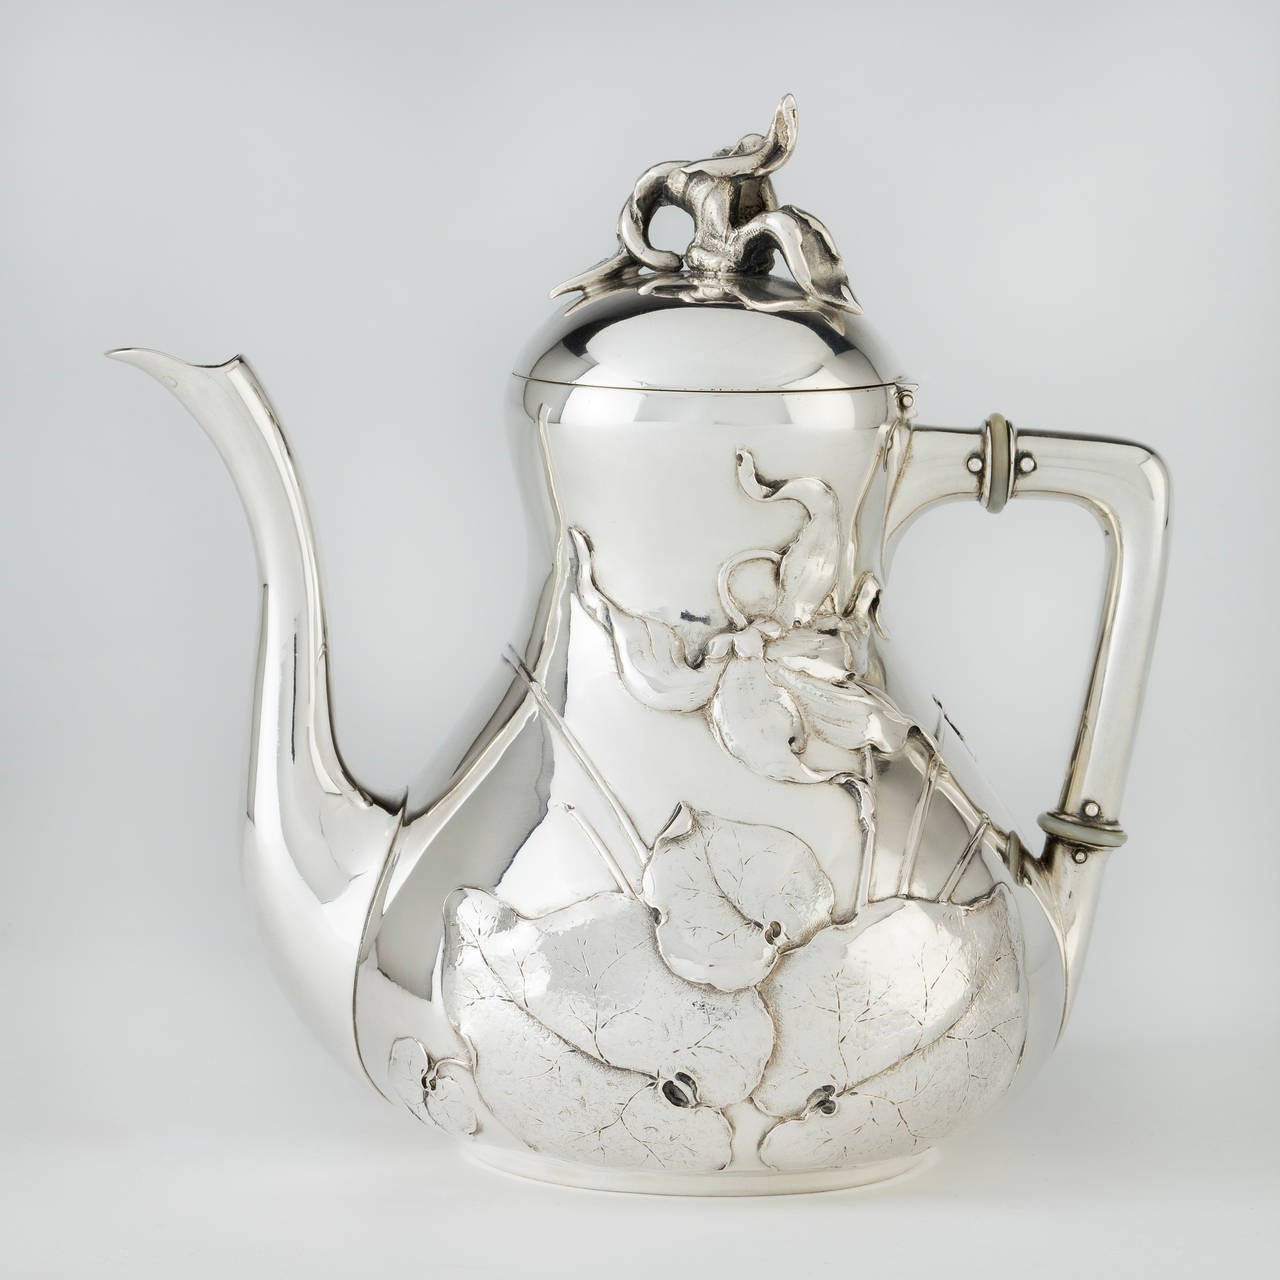 Philippe WOLFERS (1858-1929)

Tea pot 